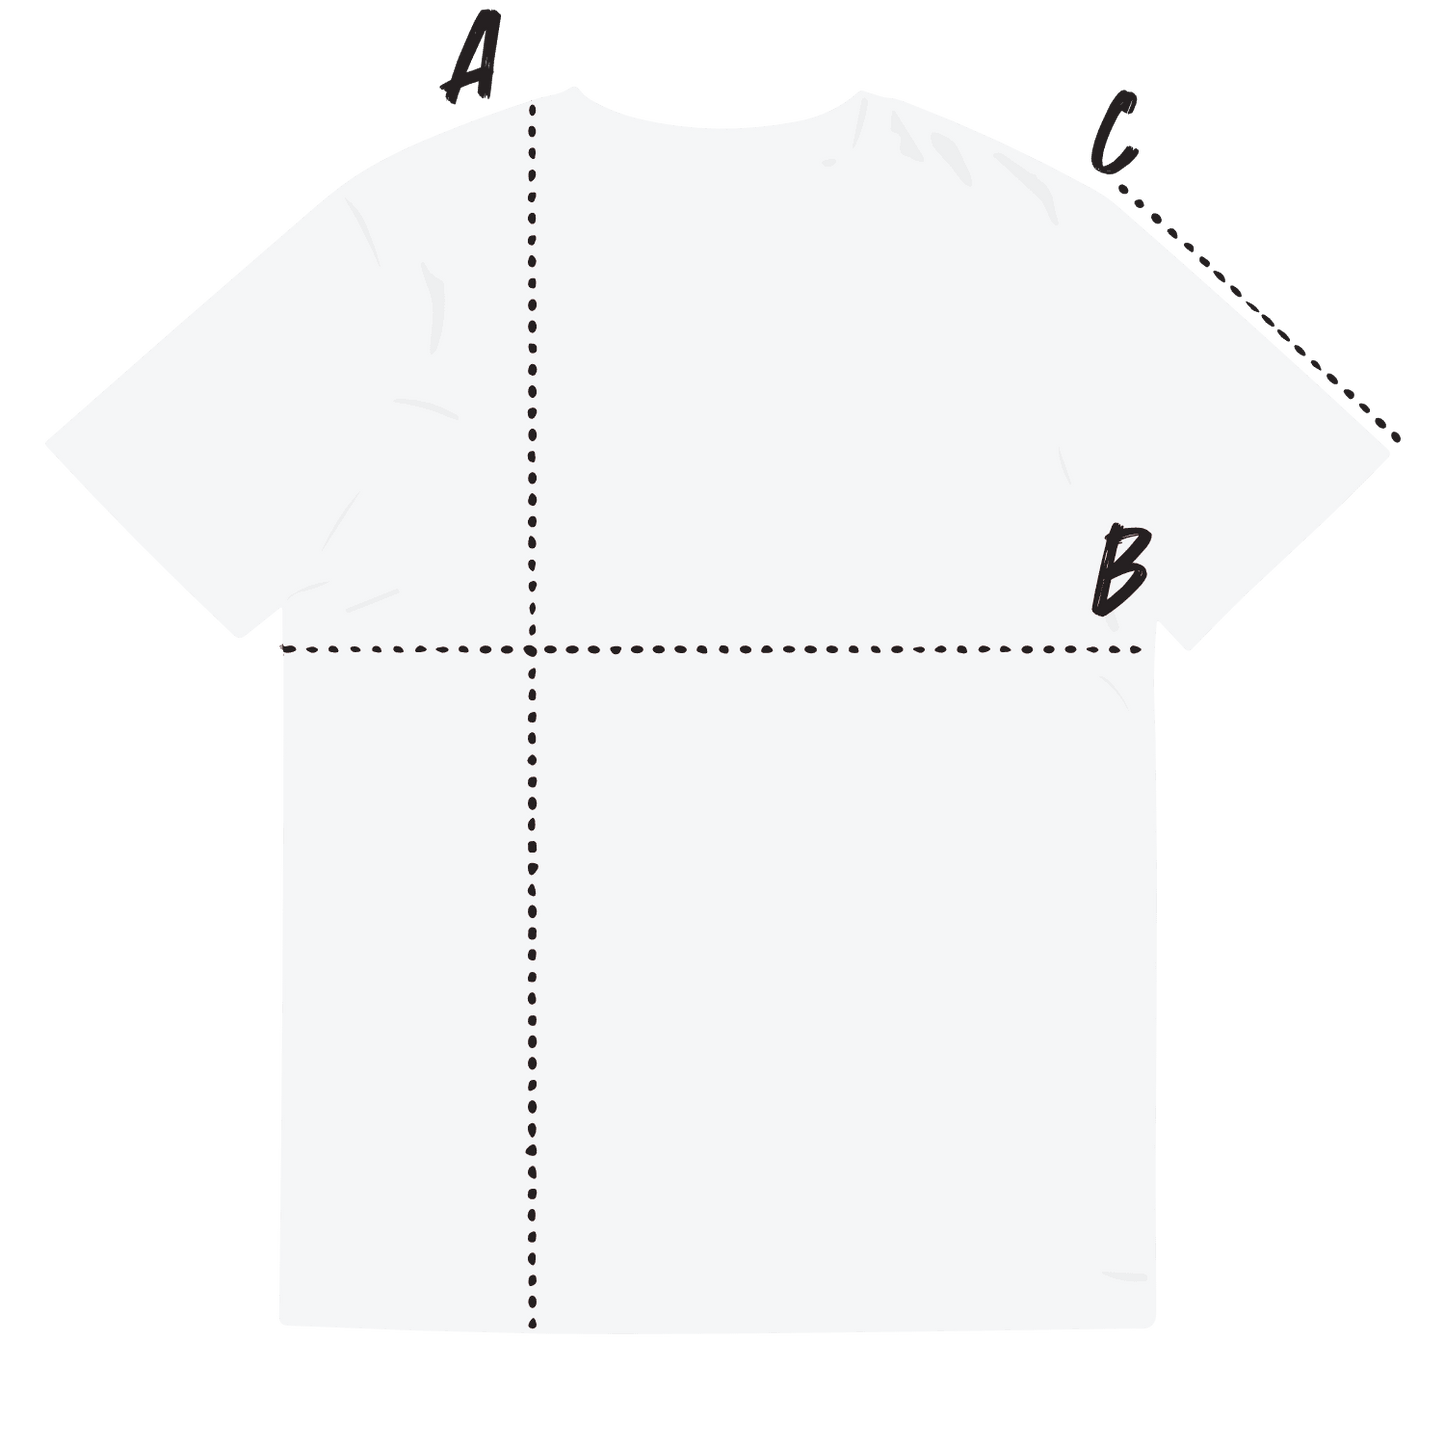 Stack Sats Unisex organic cotton t-shirt